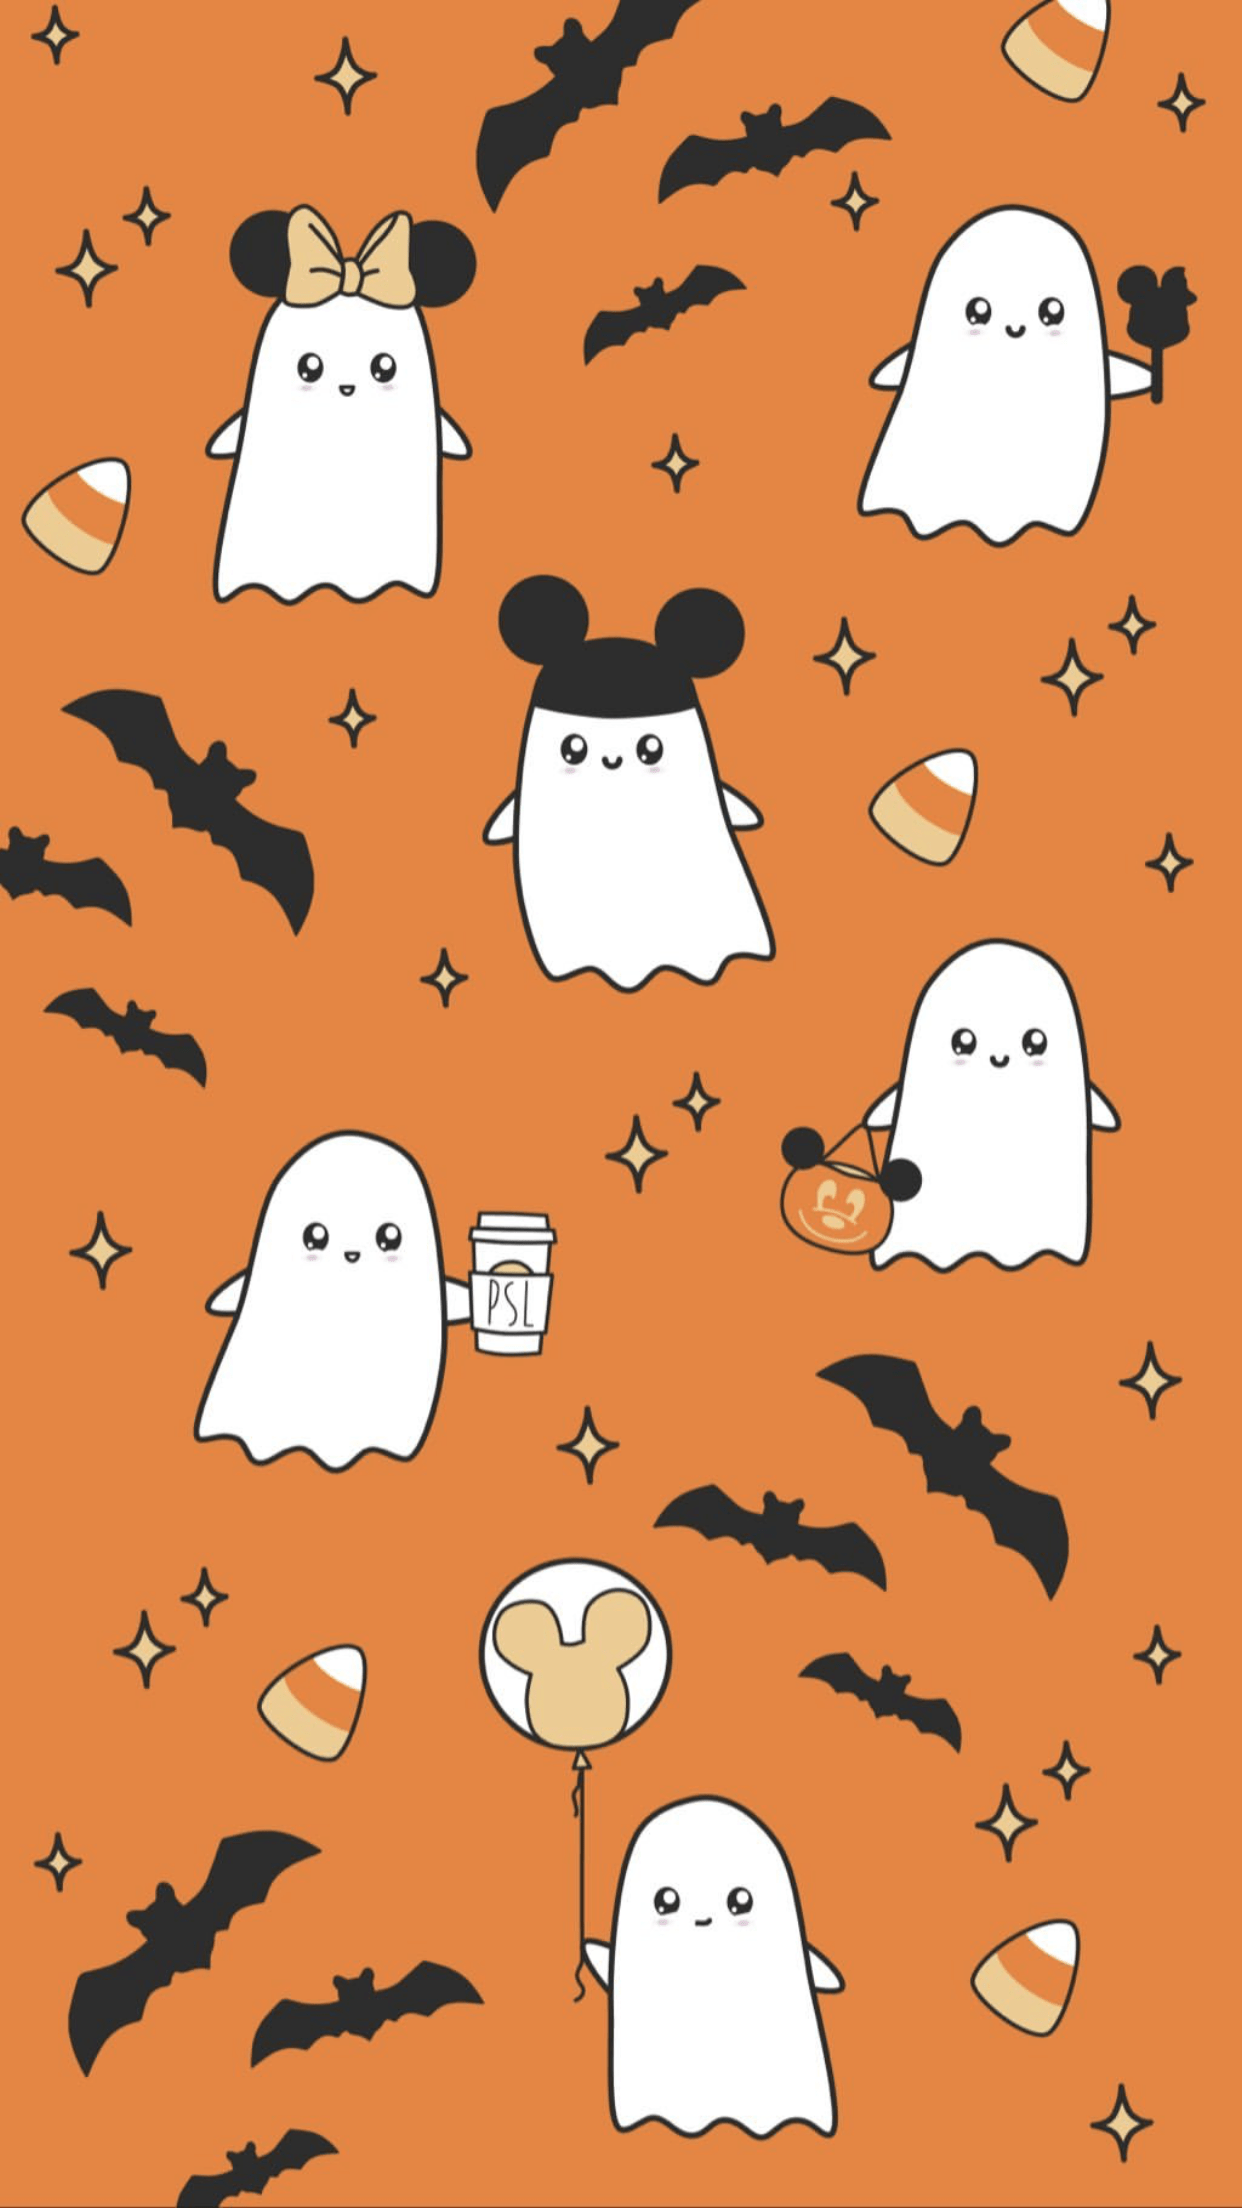 Halloween wallpaper with ghosts, bats, candy corn, and a pumpkin spice drink. - Cute Halloween